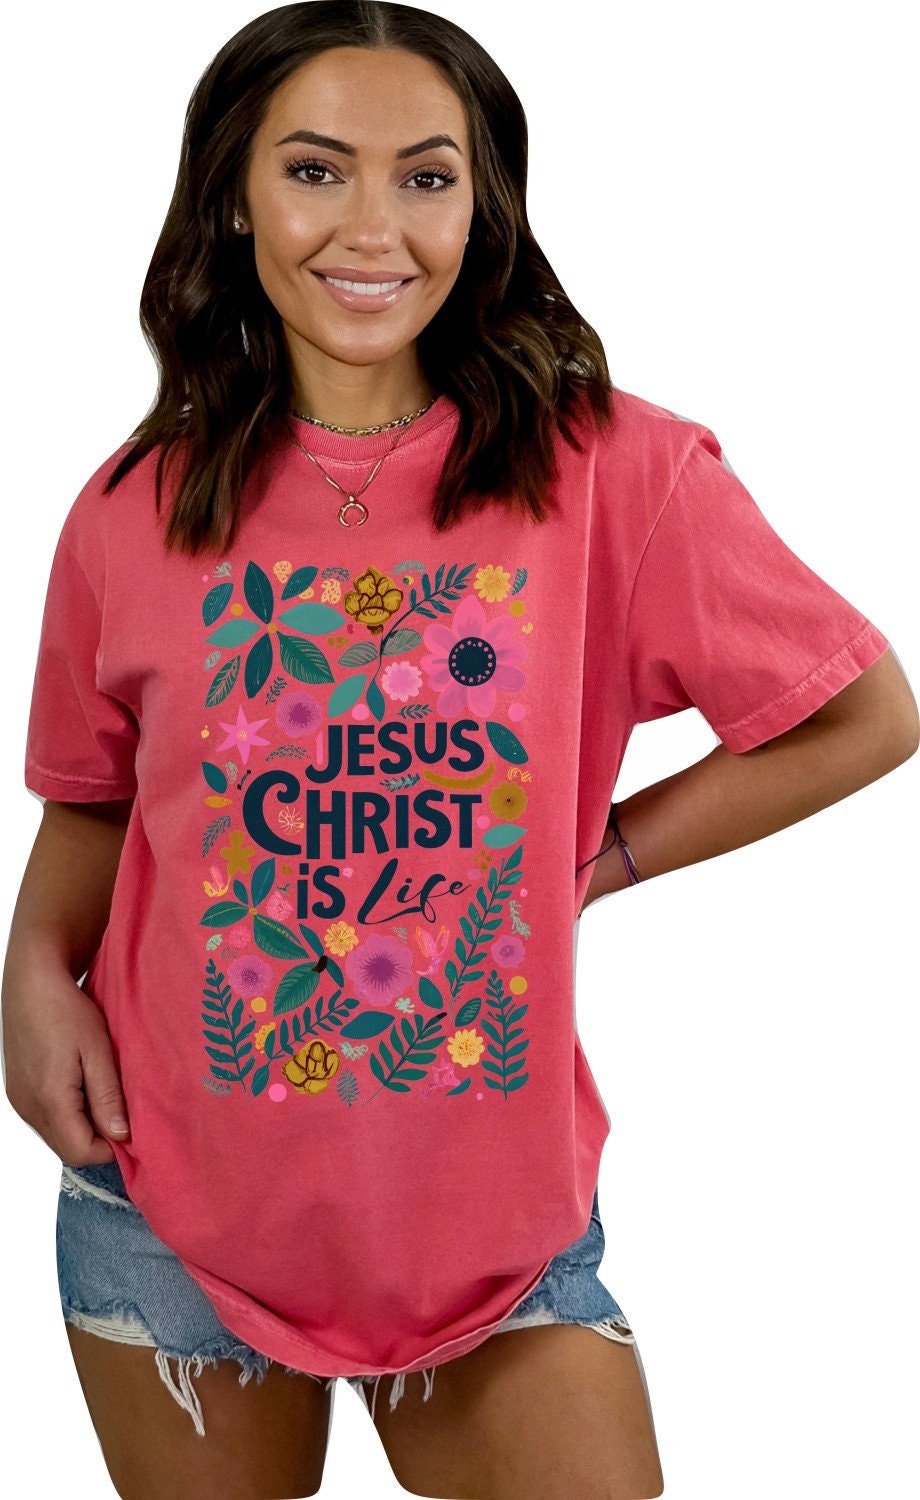 Christian Shirts Boho Christian Shirt Religious Tshirt Christian T Shirts Bible Verse Shirt Jesus Christ is Life Shirt